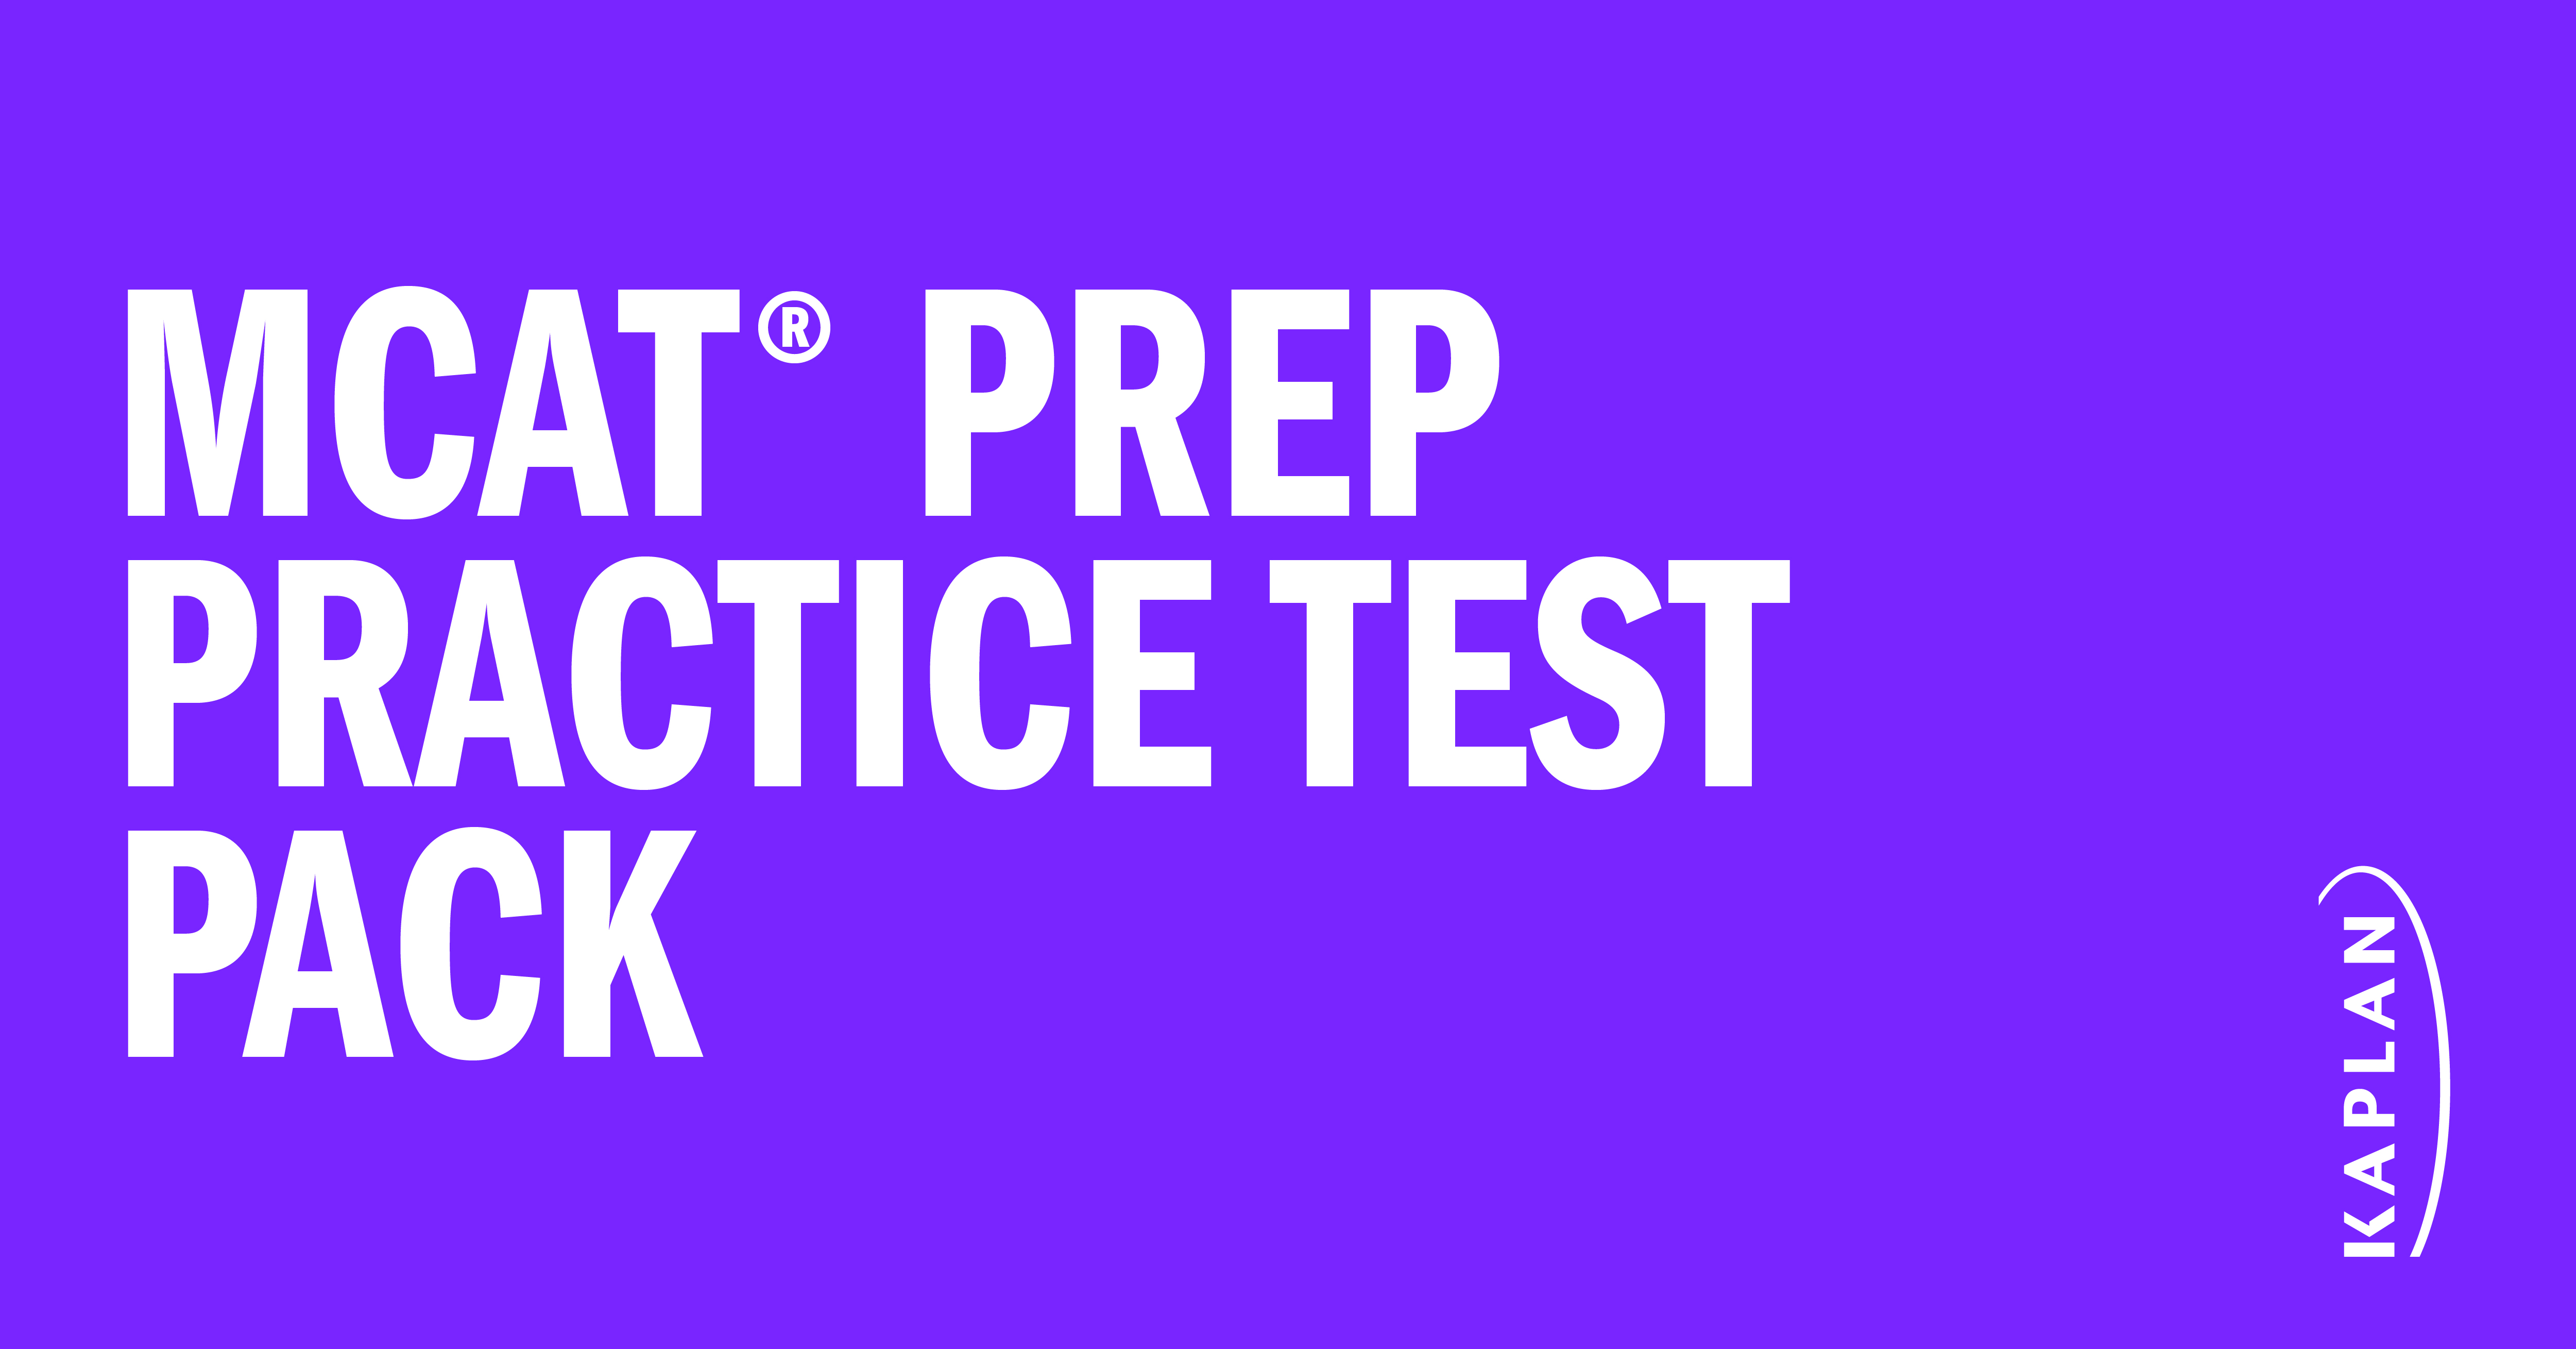 mcat practice test next step prep